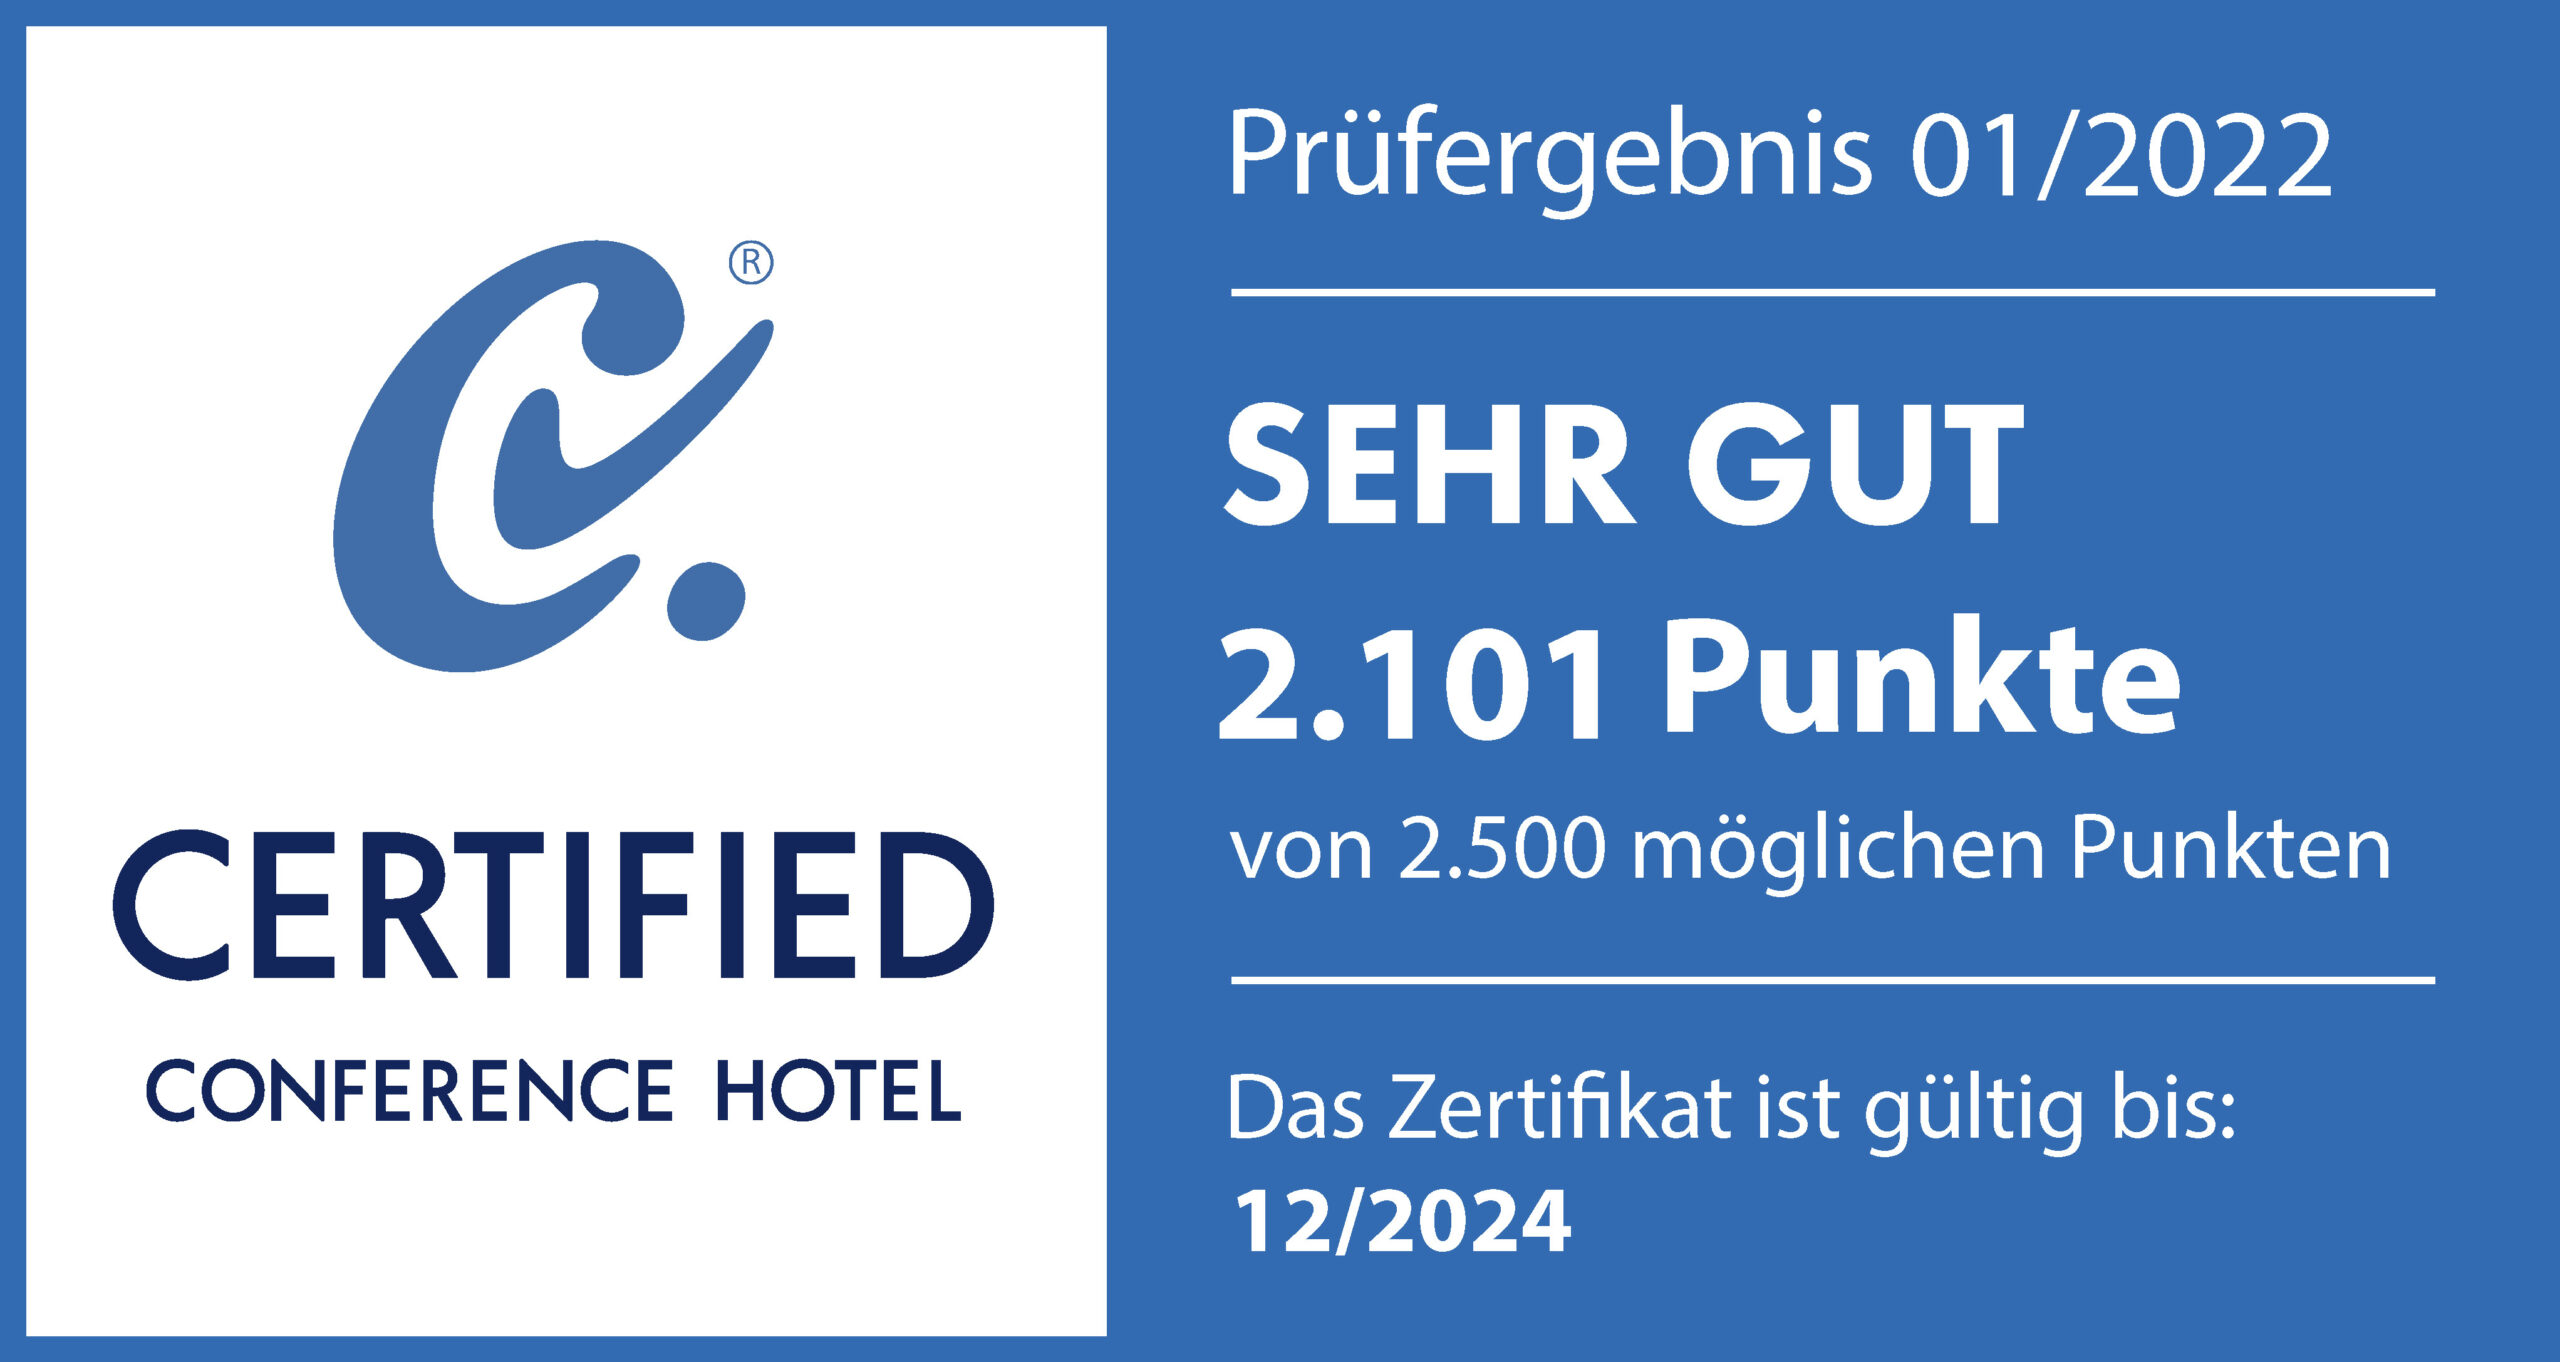 Kongresshotel Potsdam. Certified. Conference Hotel.